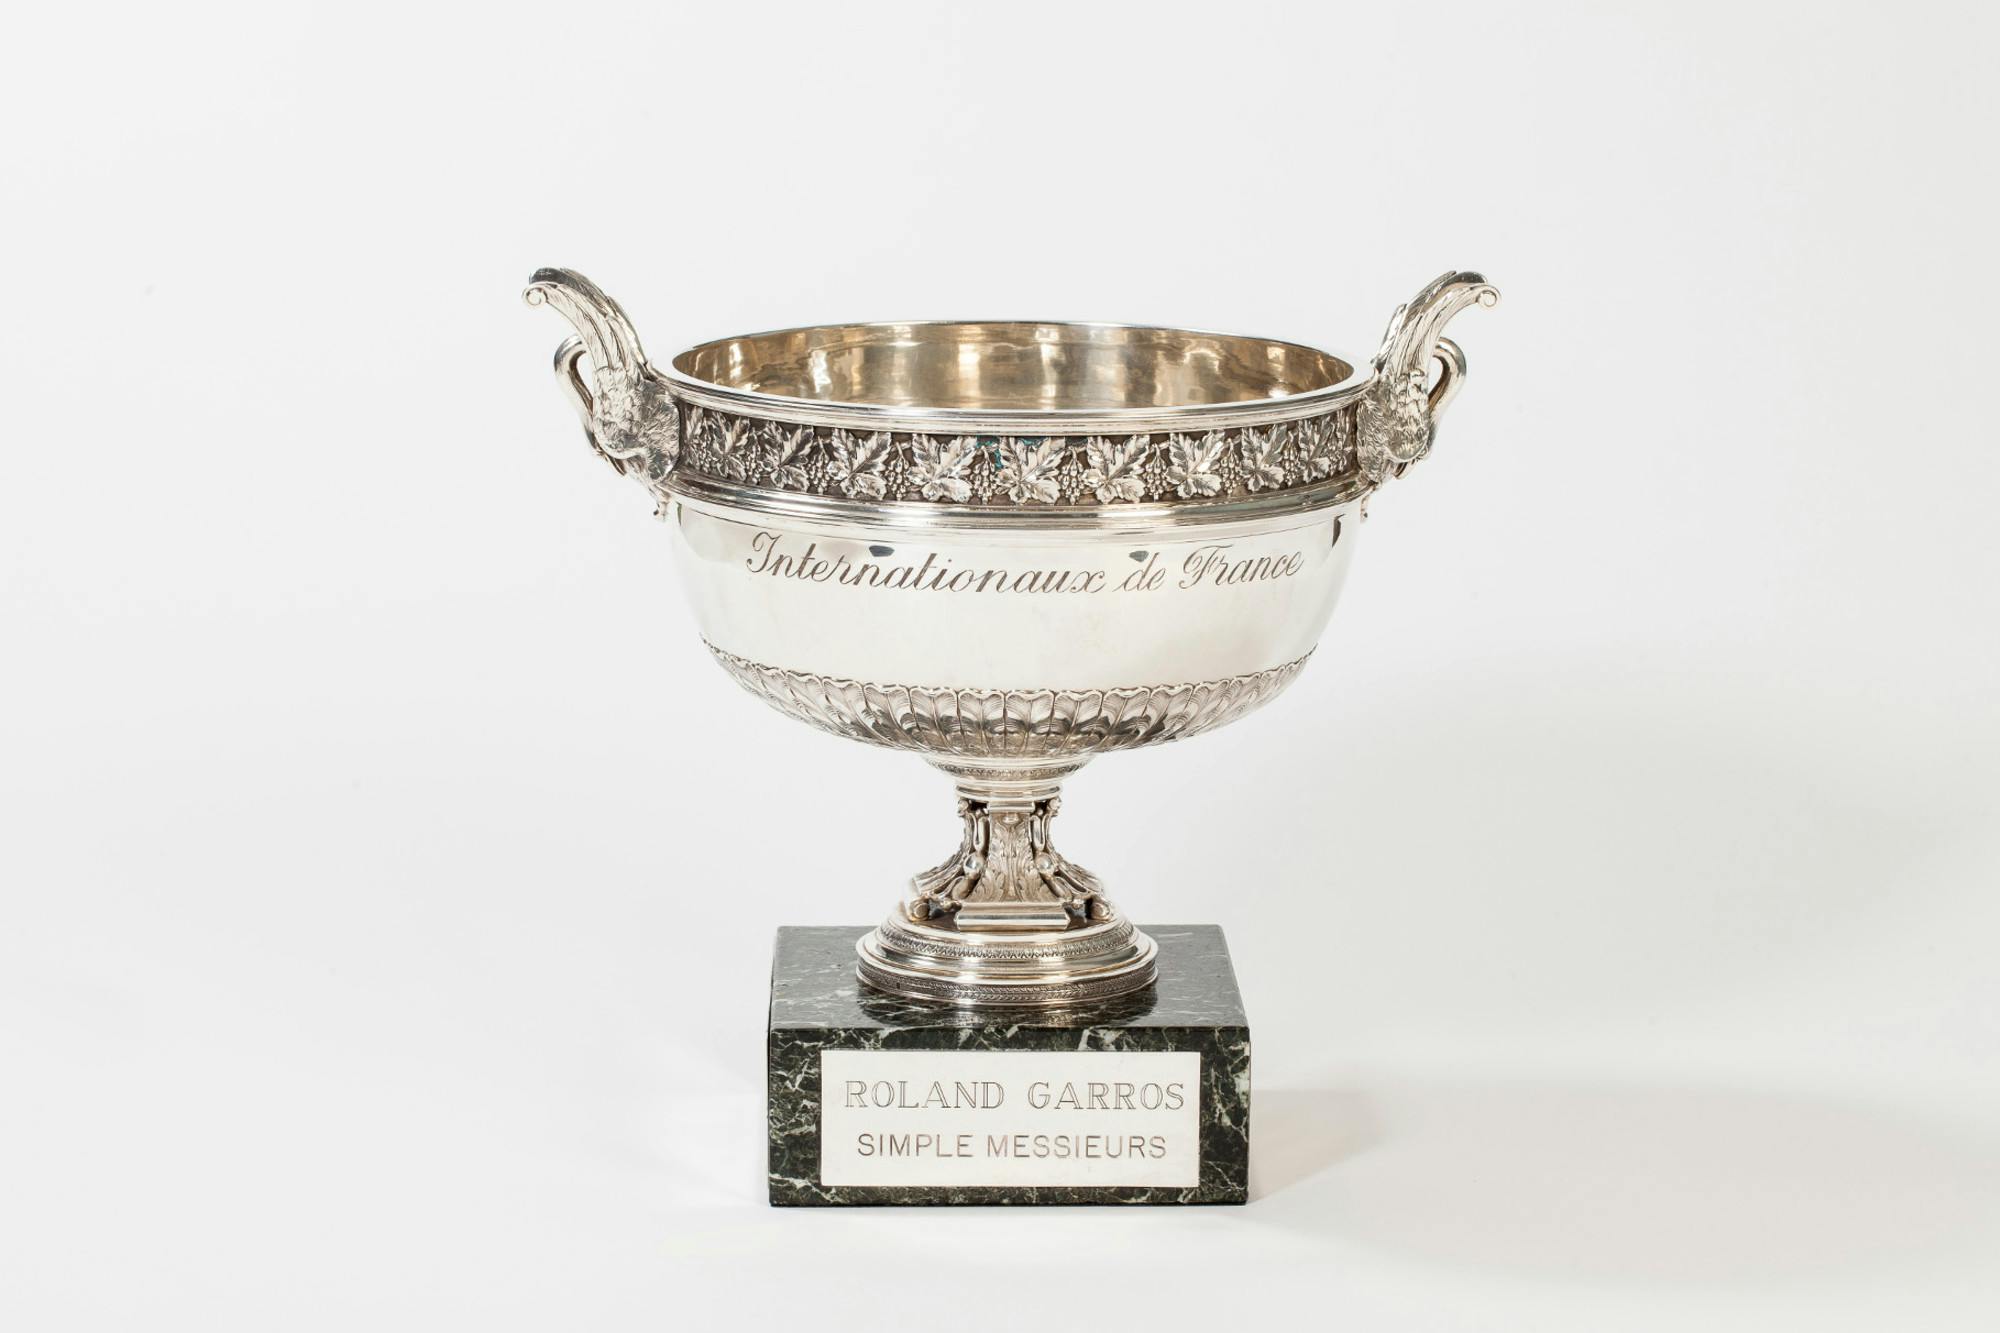 Louis Vuitton have designed the trophy trunks for Roland-Garros